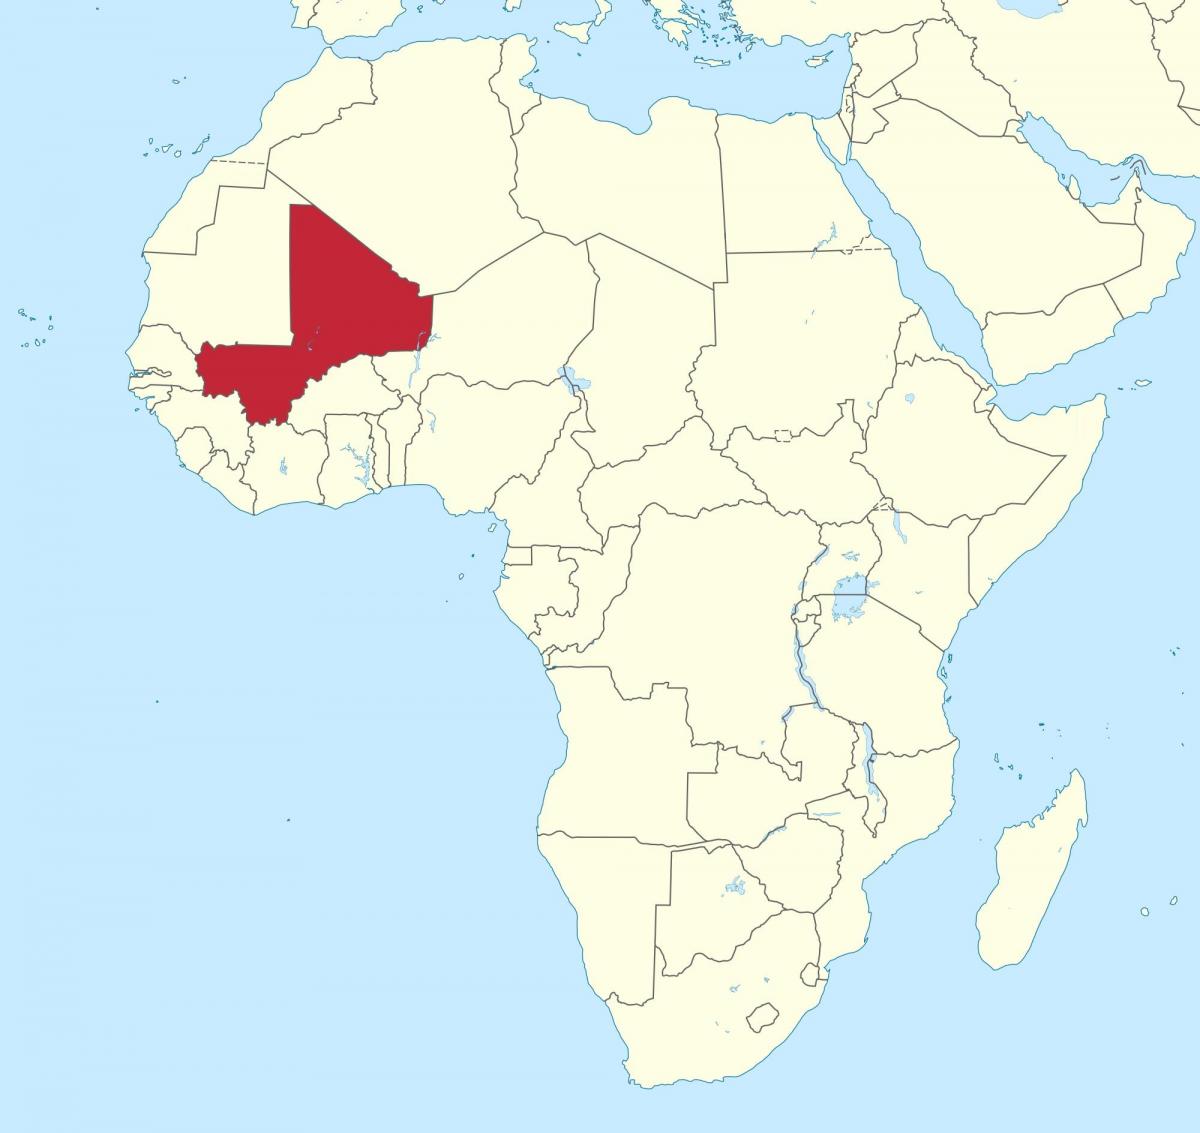 Расположение Мали на карте мира